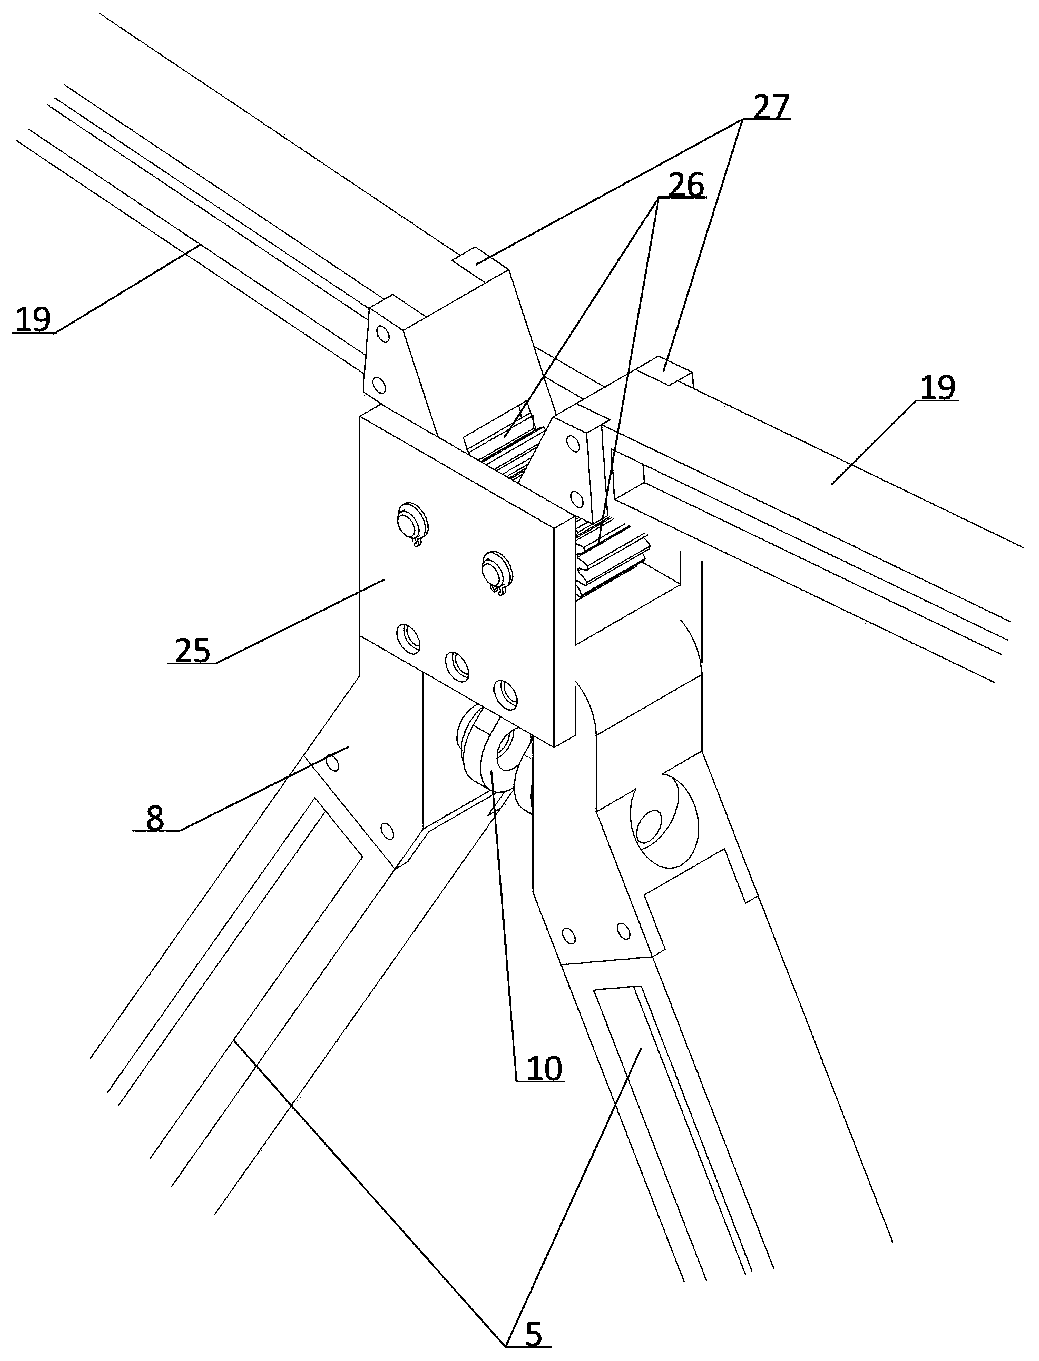 Parabolic cylinder antenna deployable mechanism with multiple hyperelastic hinges